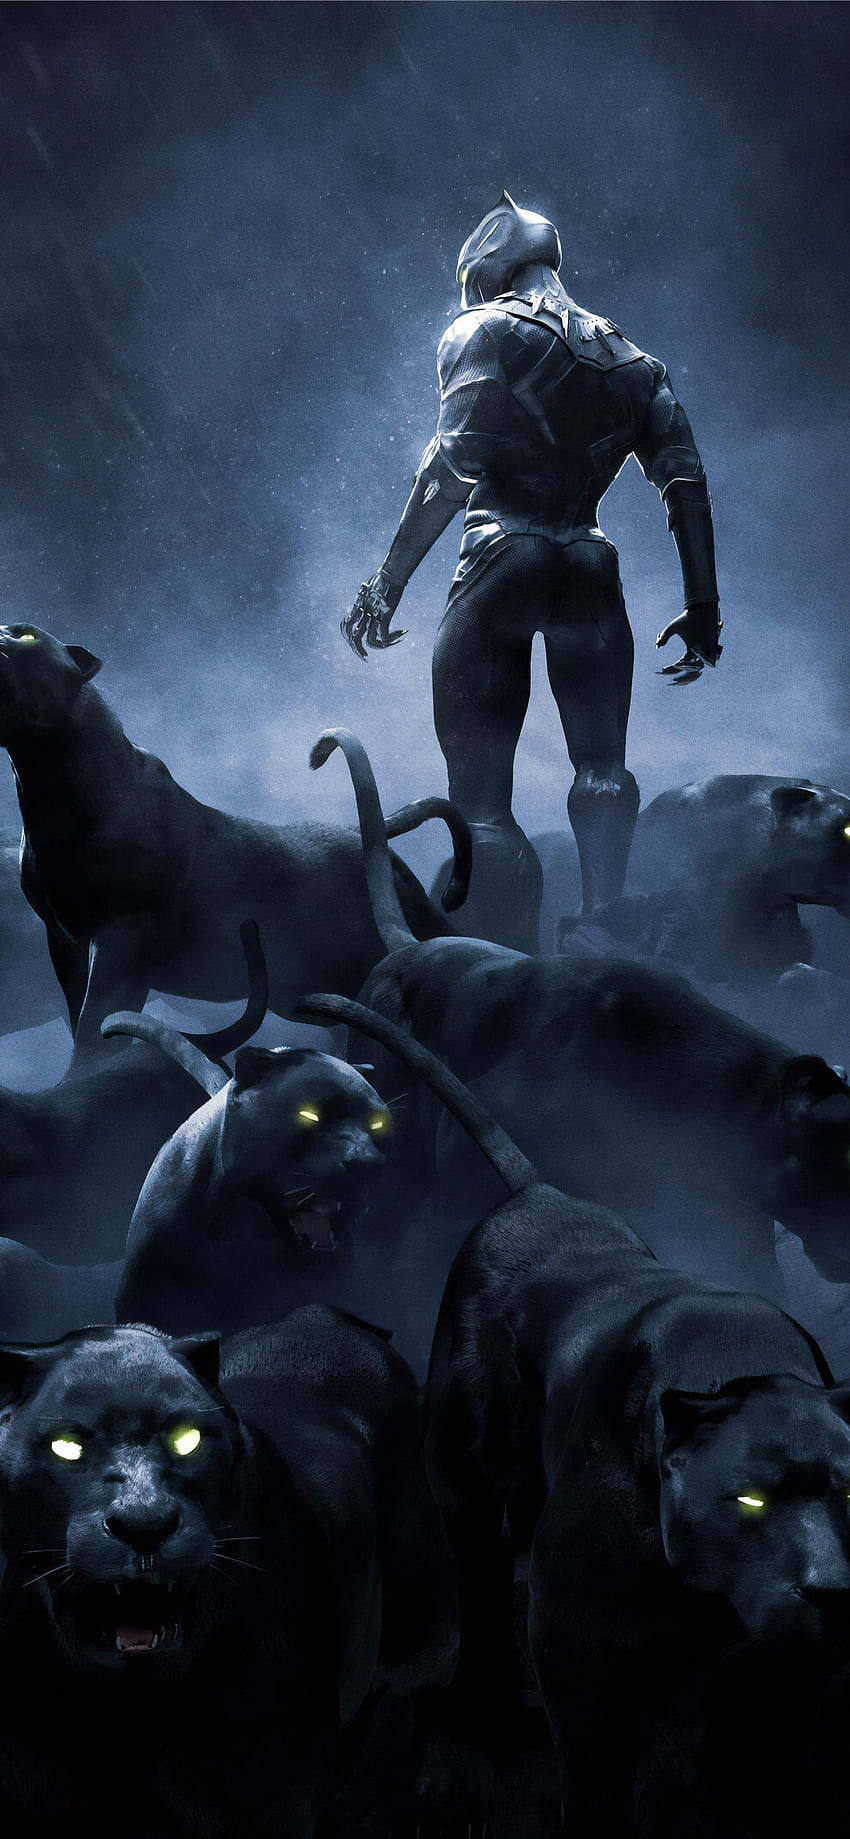 Black Panther Rise Up en resolución iPhone, Black Panther Animal fondo de pantalla del teléfono